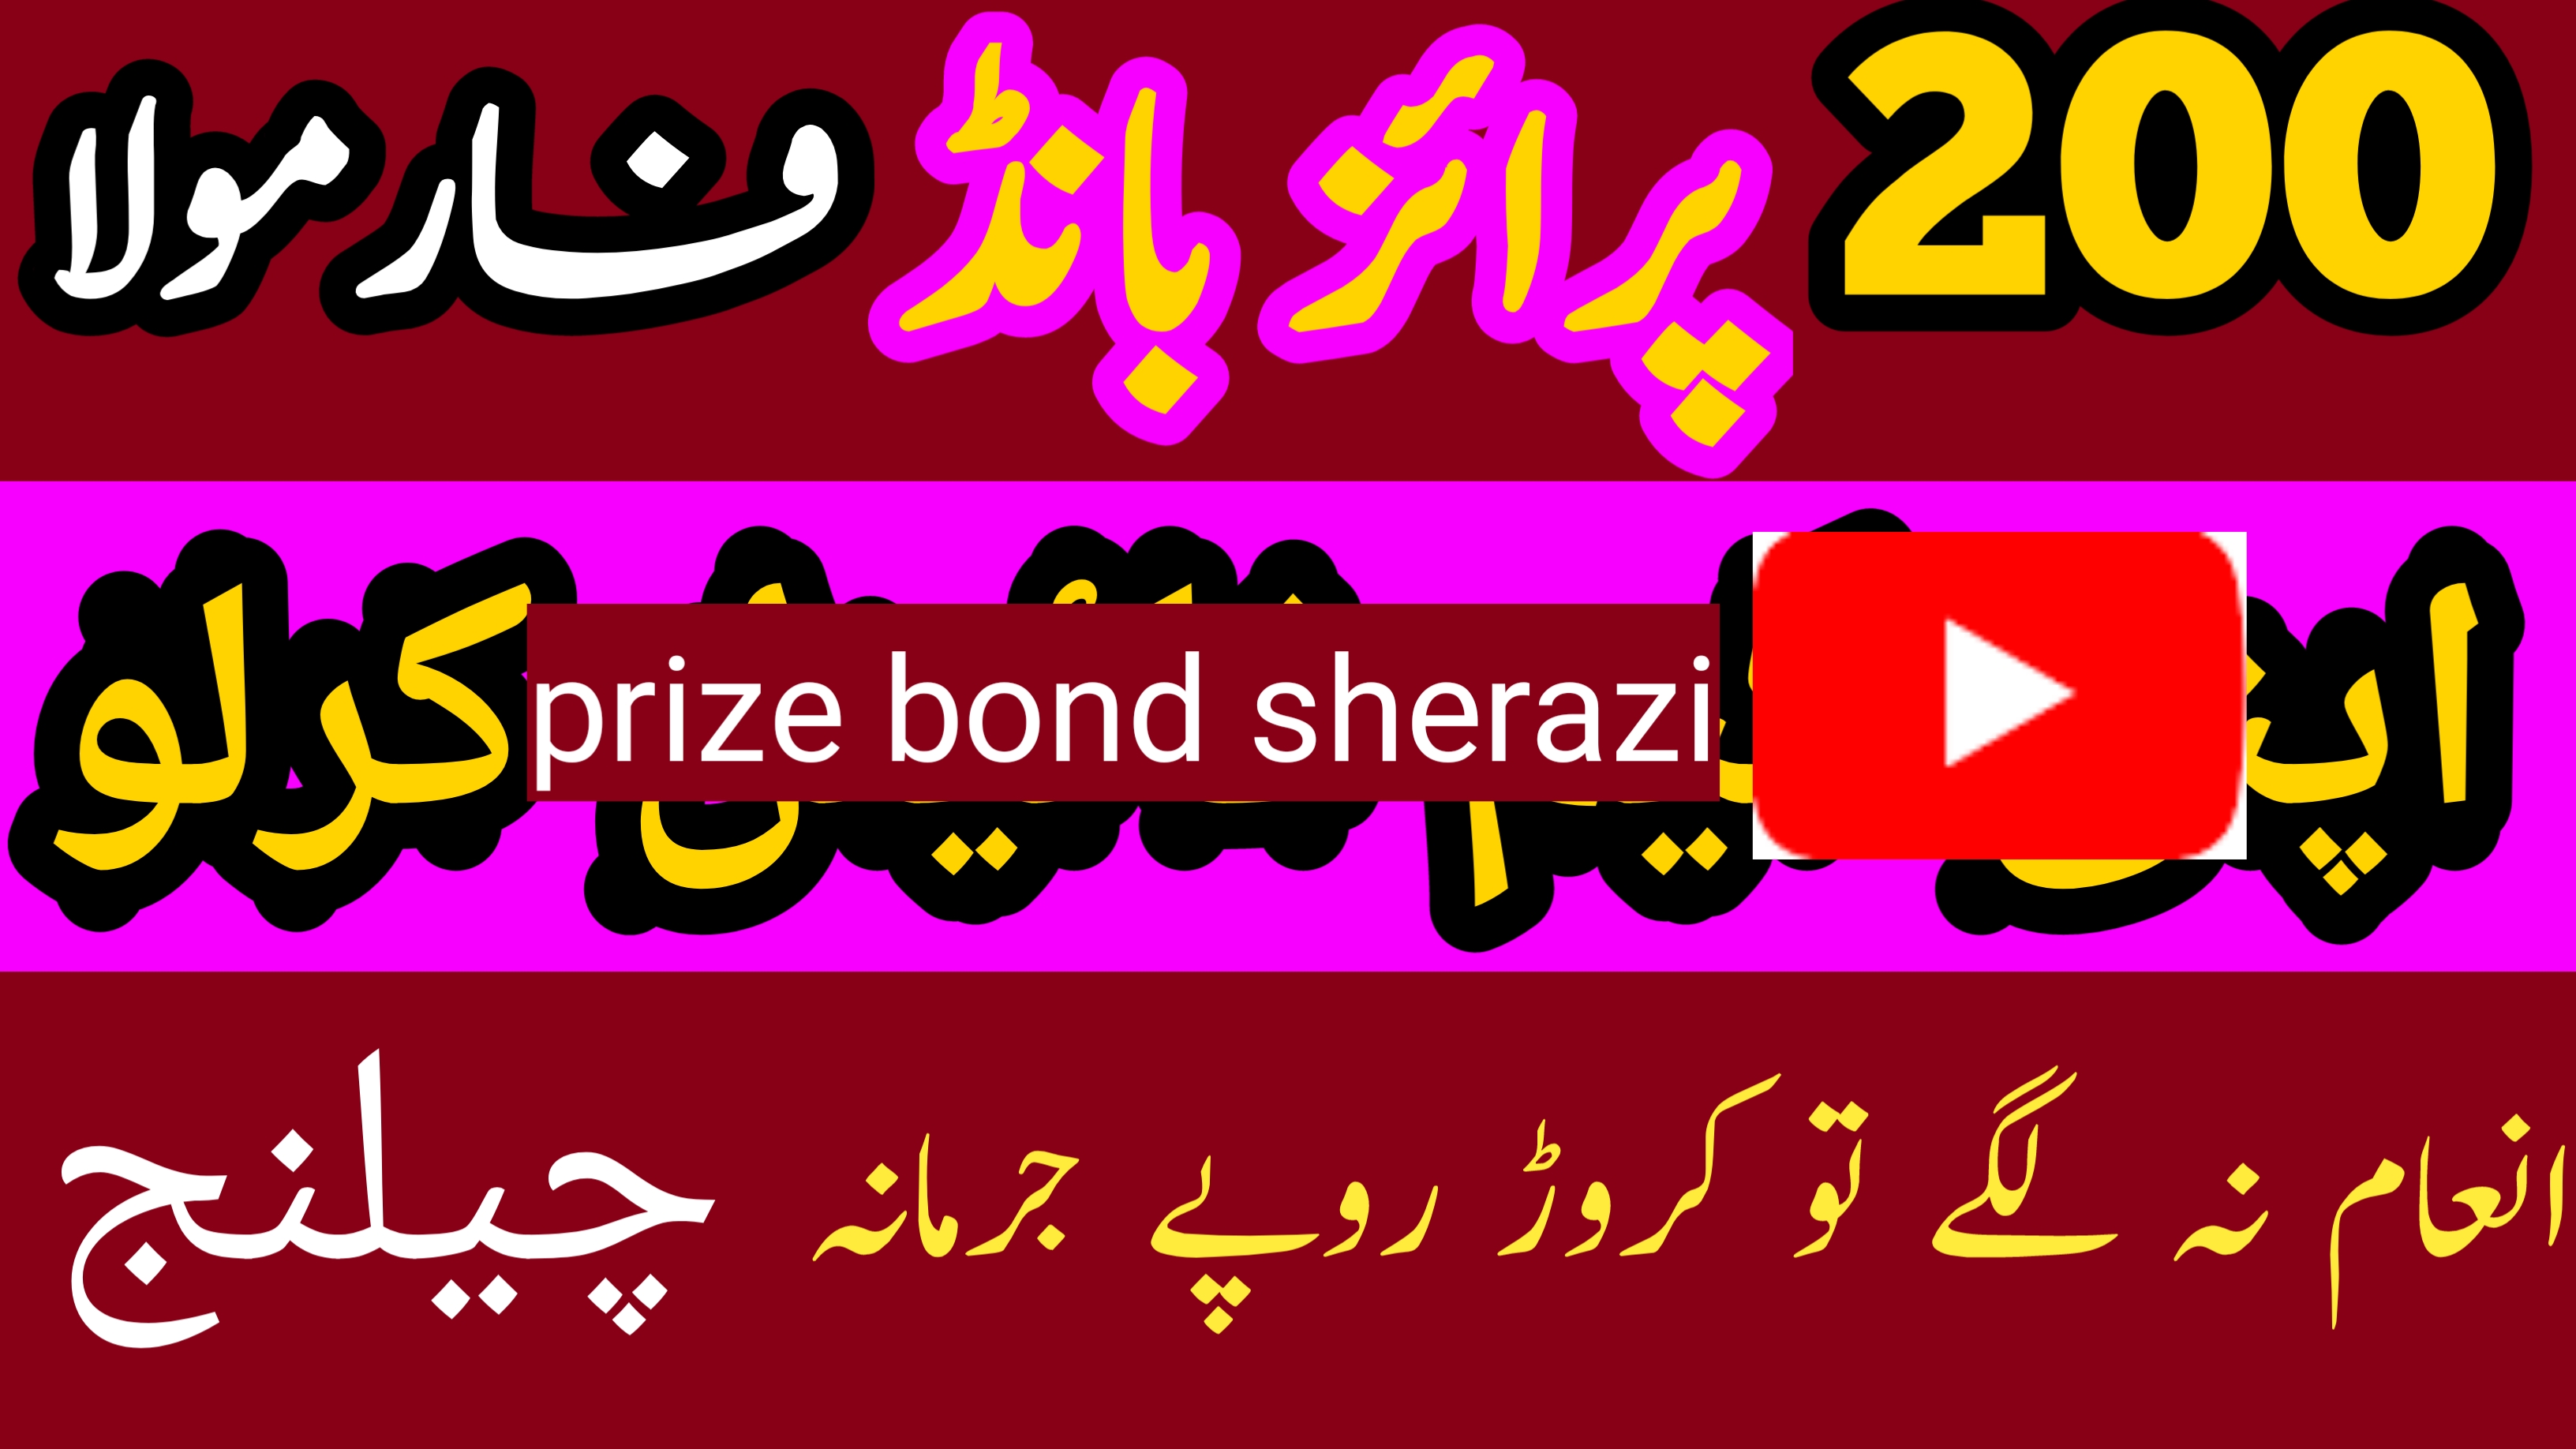 Sherazi prize bond